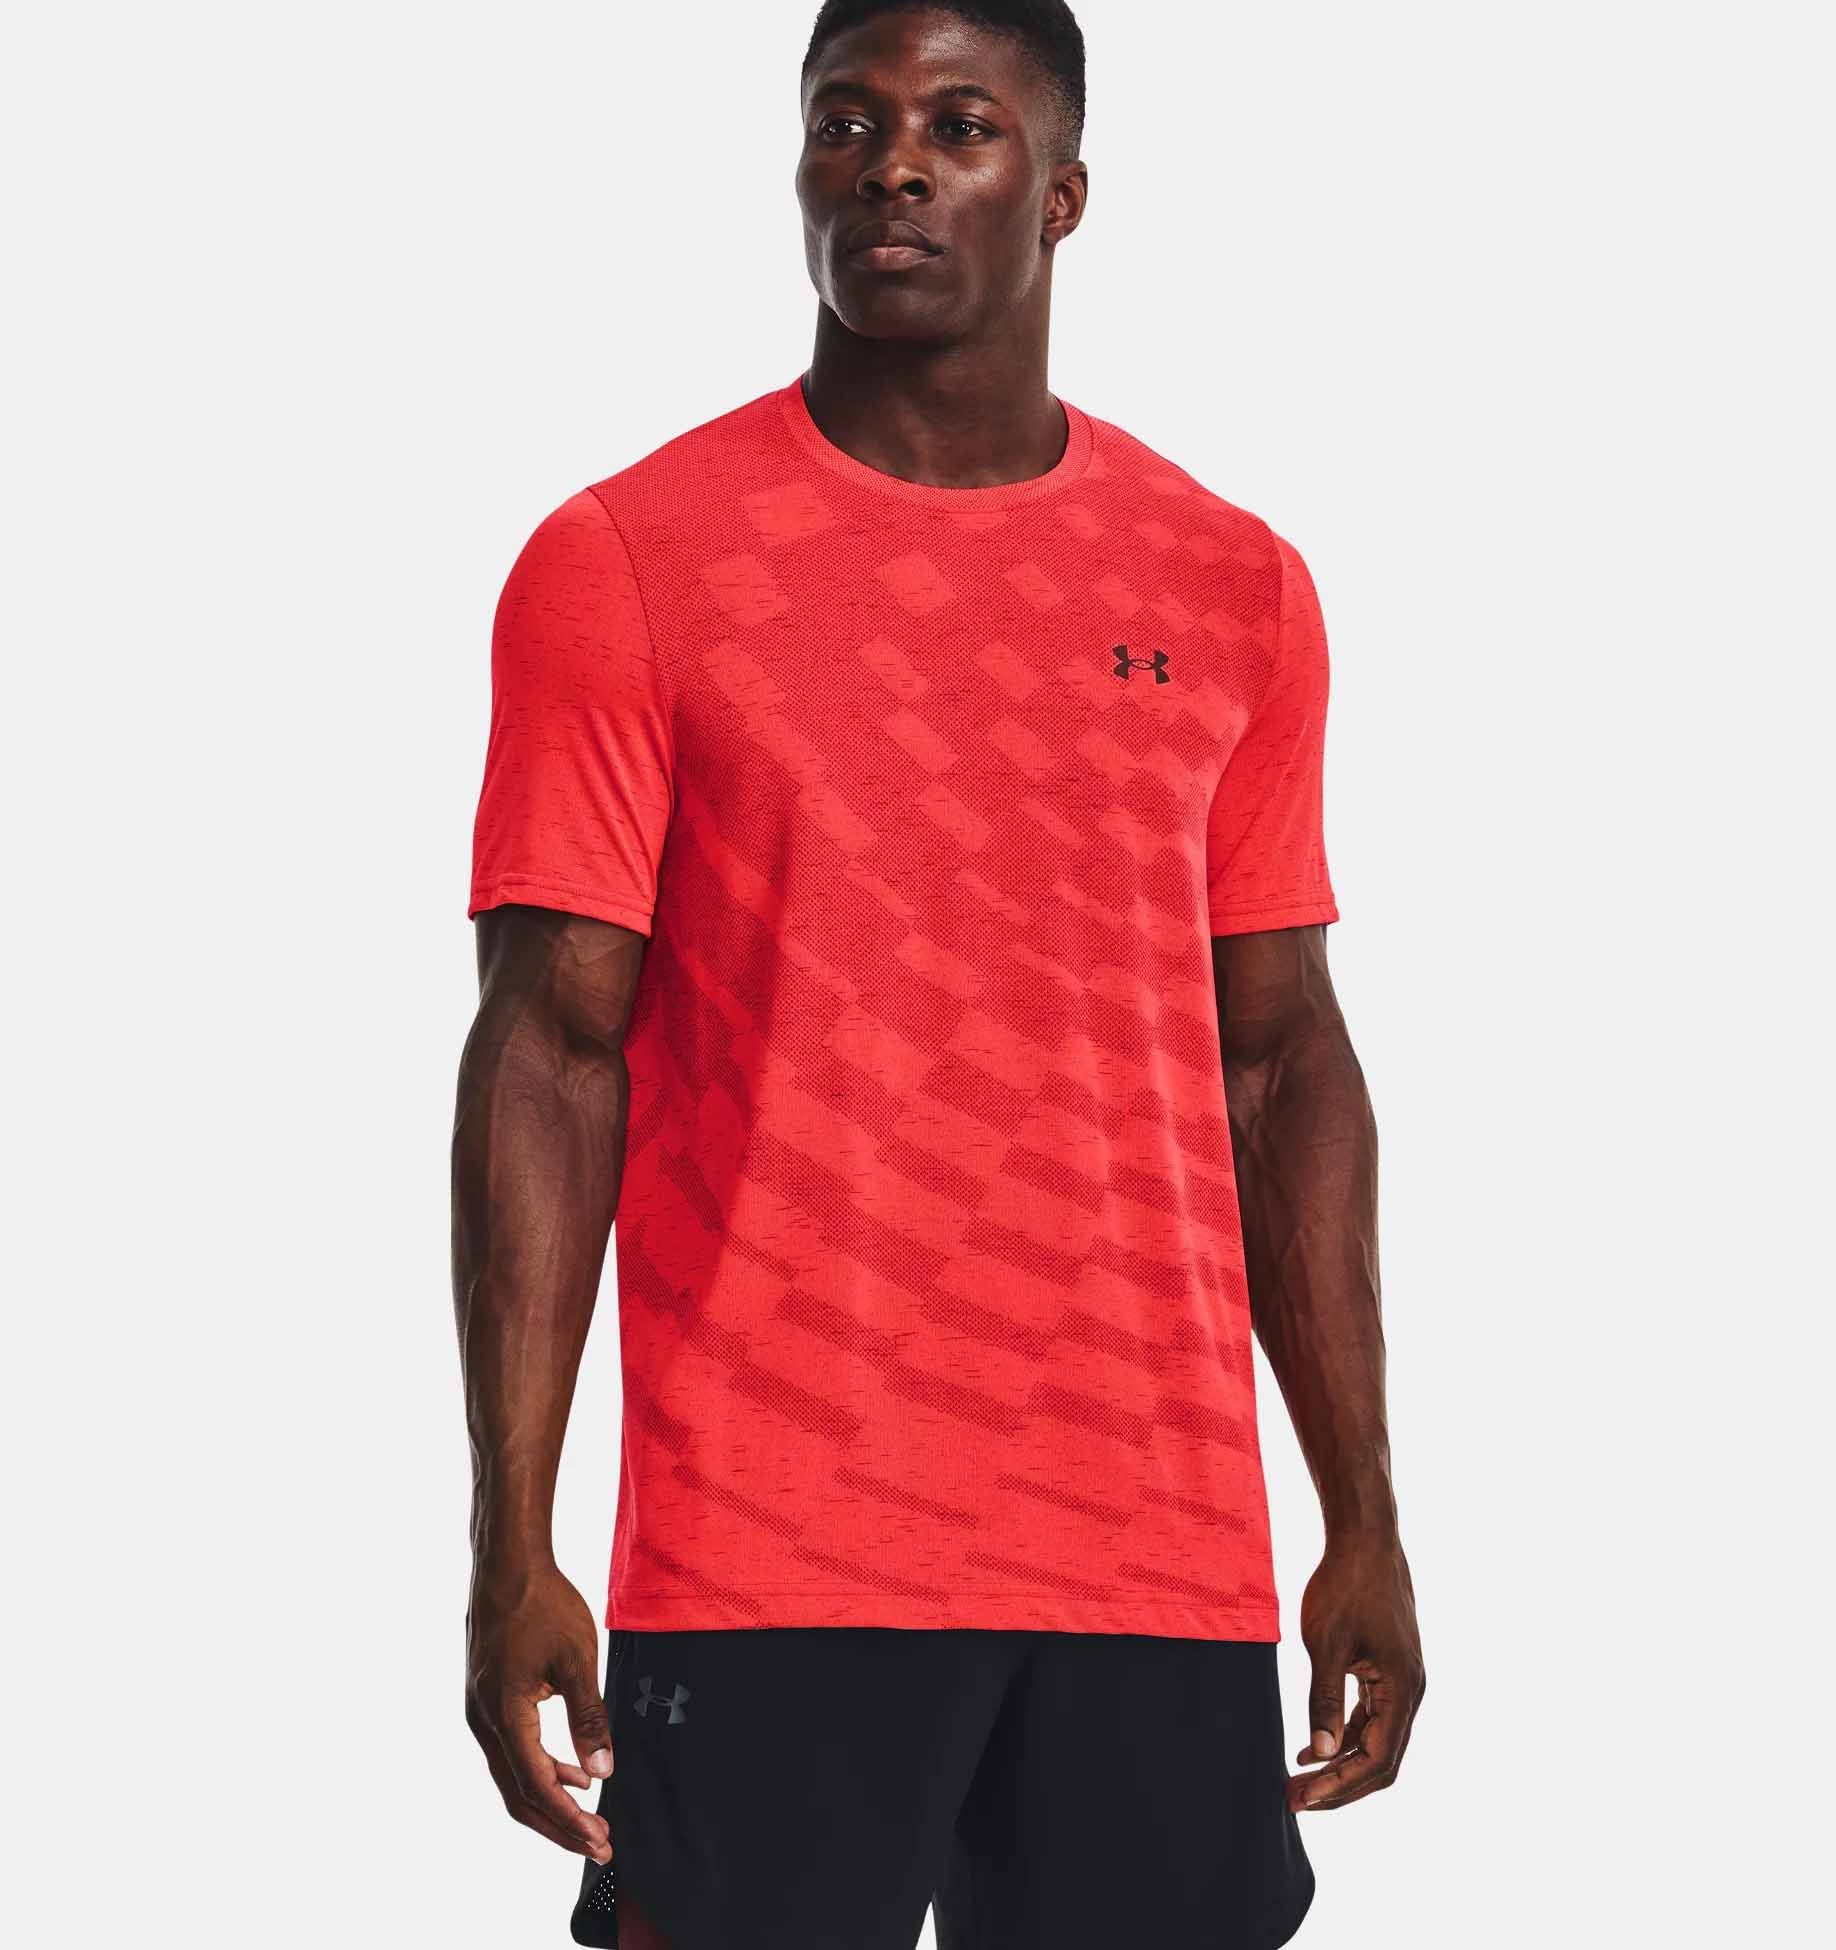 UA Seamless Radial short sleeve shirt 